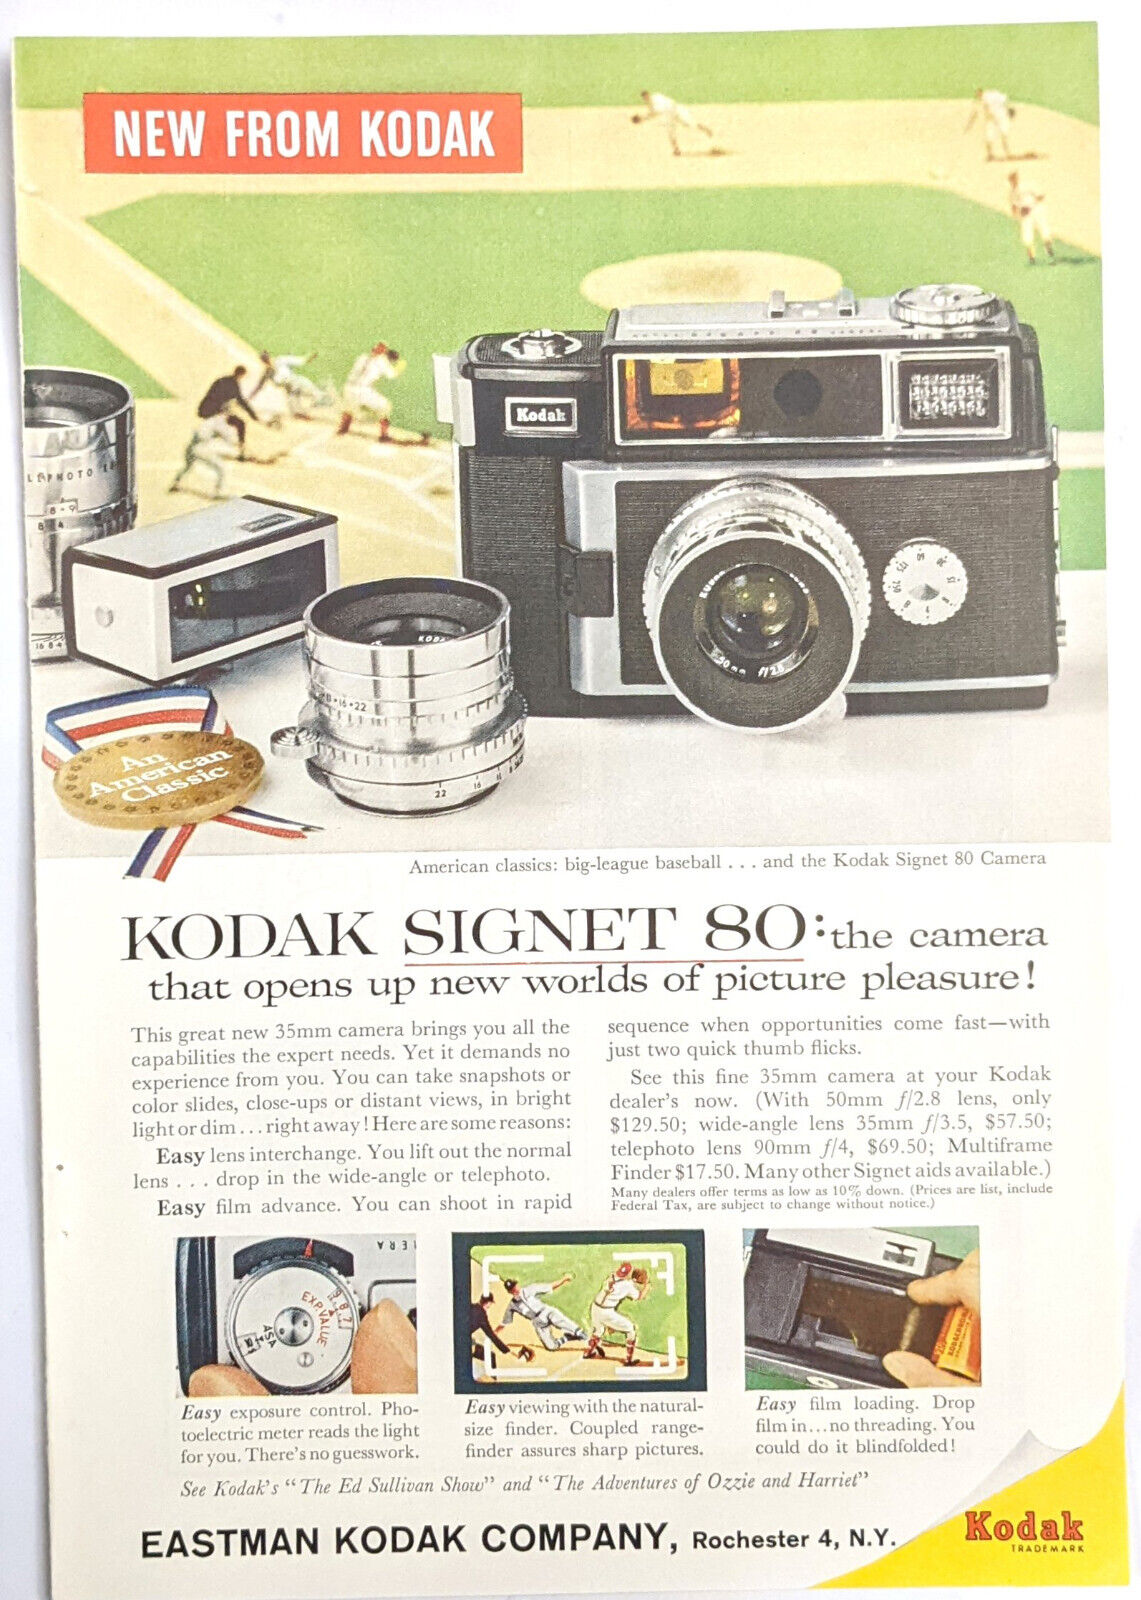 Vintage 1959 Kodak Magazine Ad - Signet 80 Camera